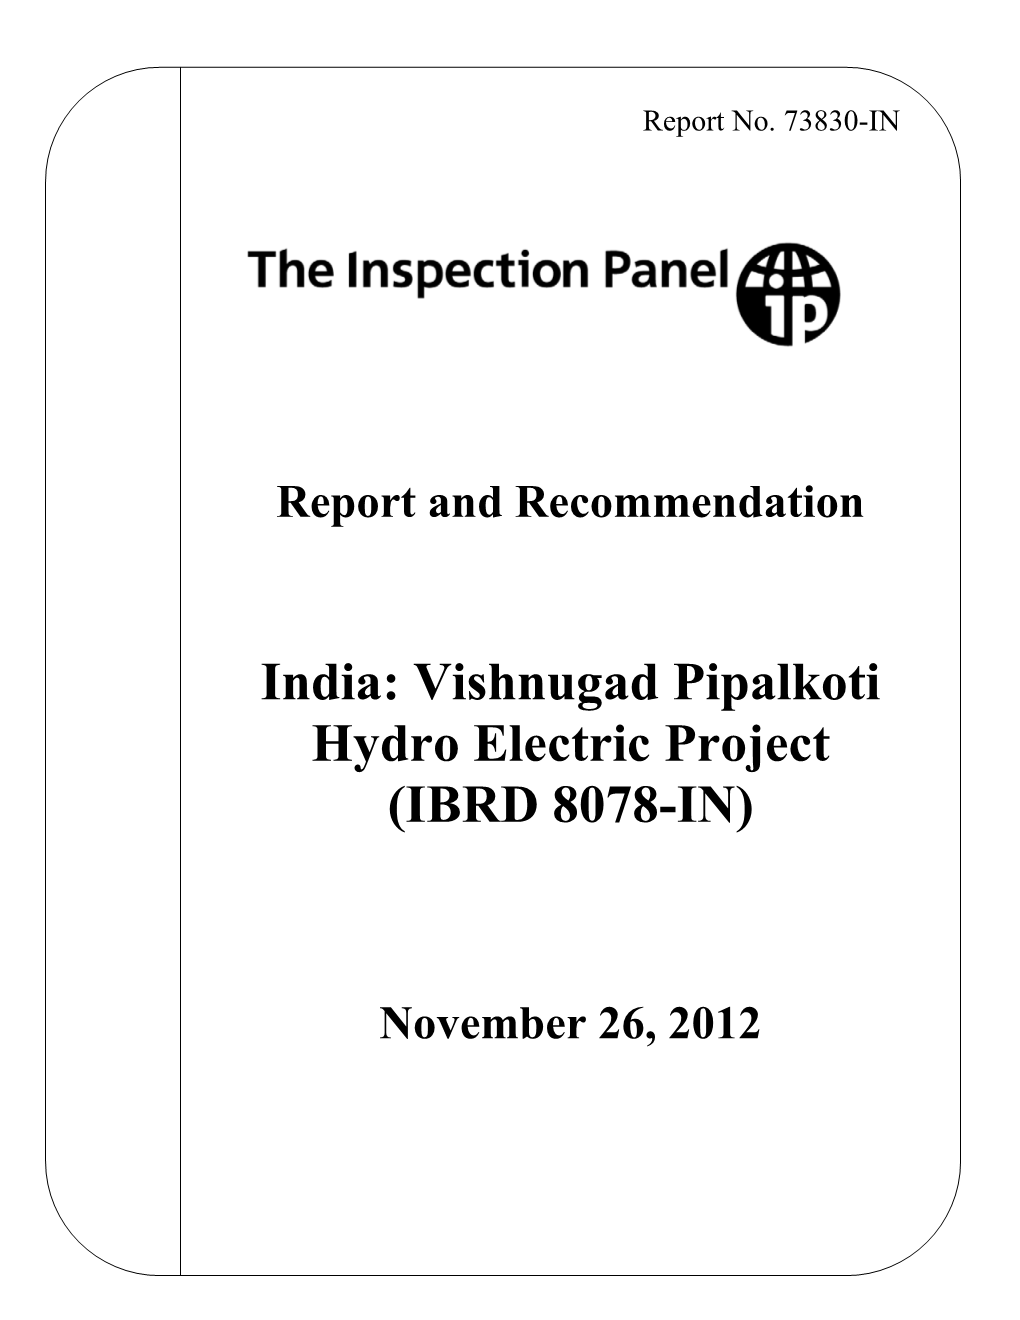 India: Vishnugad Pipalkoti Hydro Electric Project (IBRD 8078-IN)